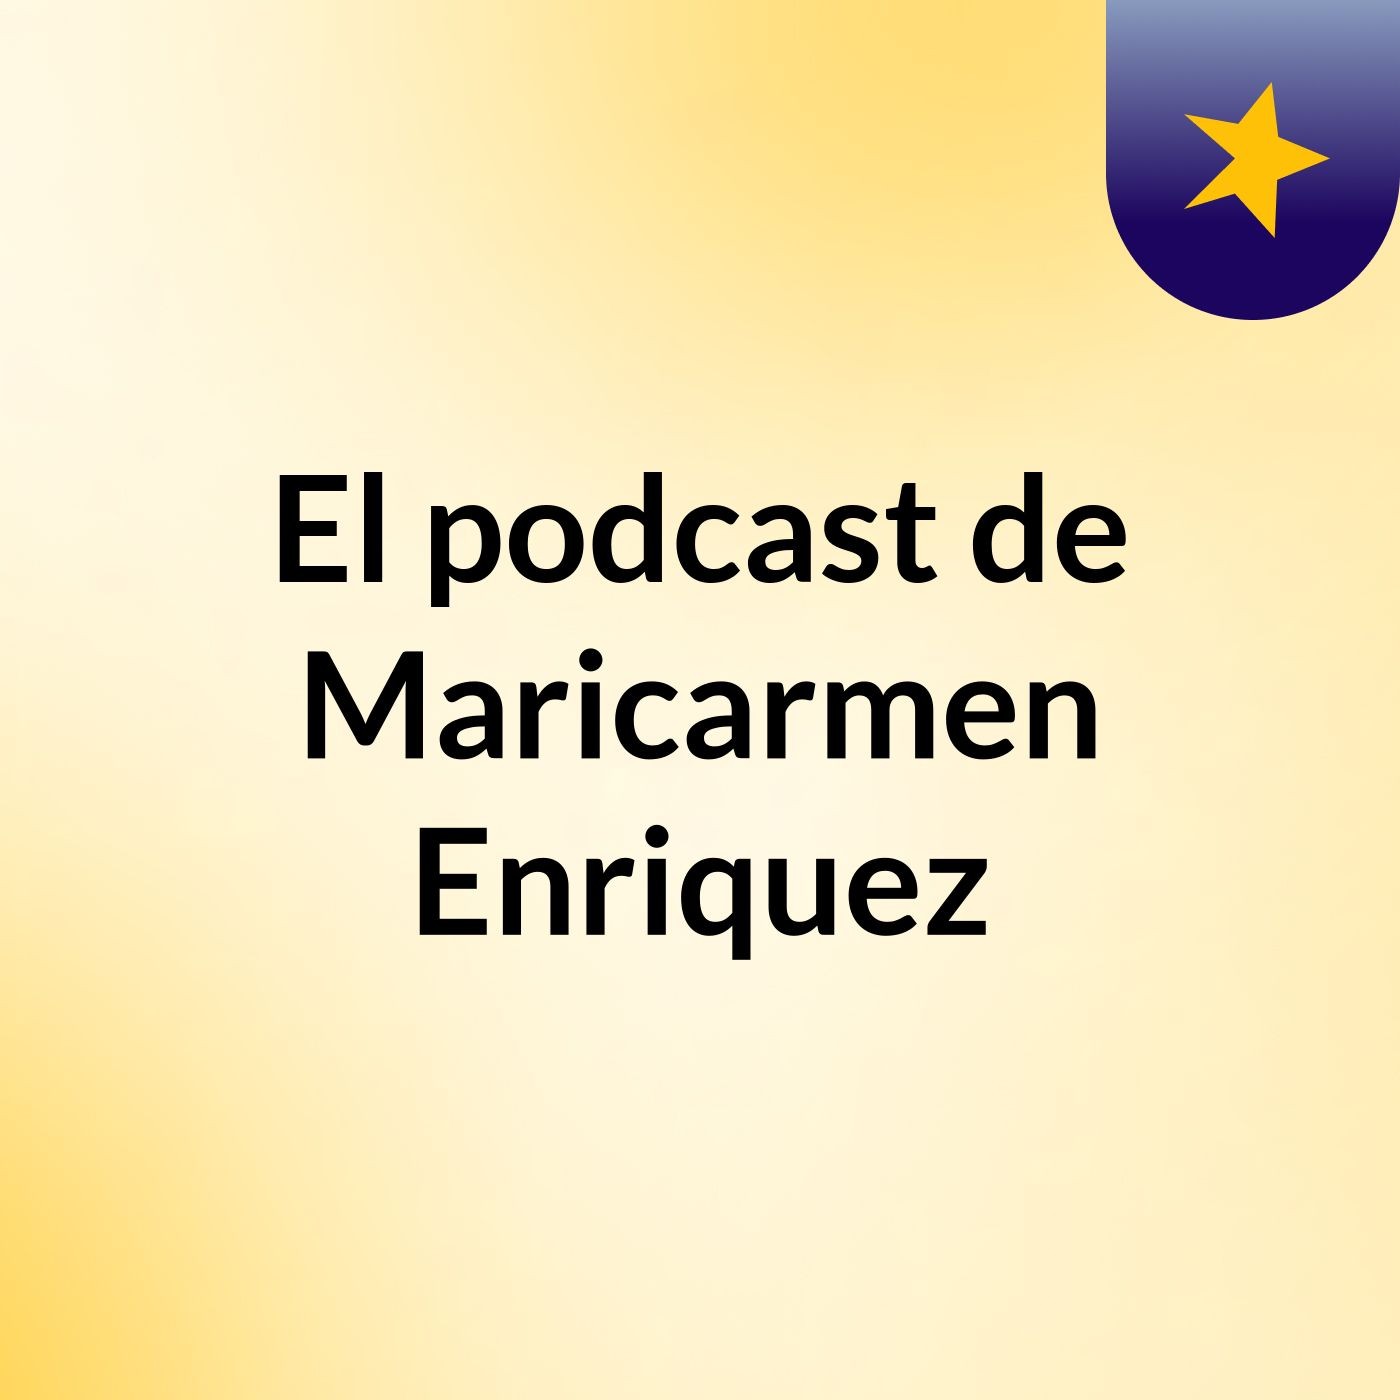 El podcast de Maricarmen Enriquez